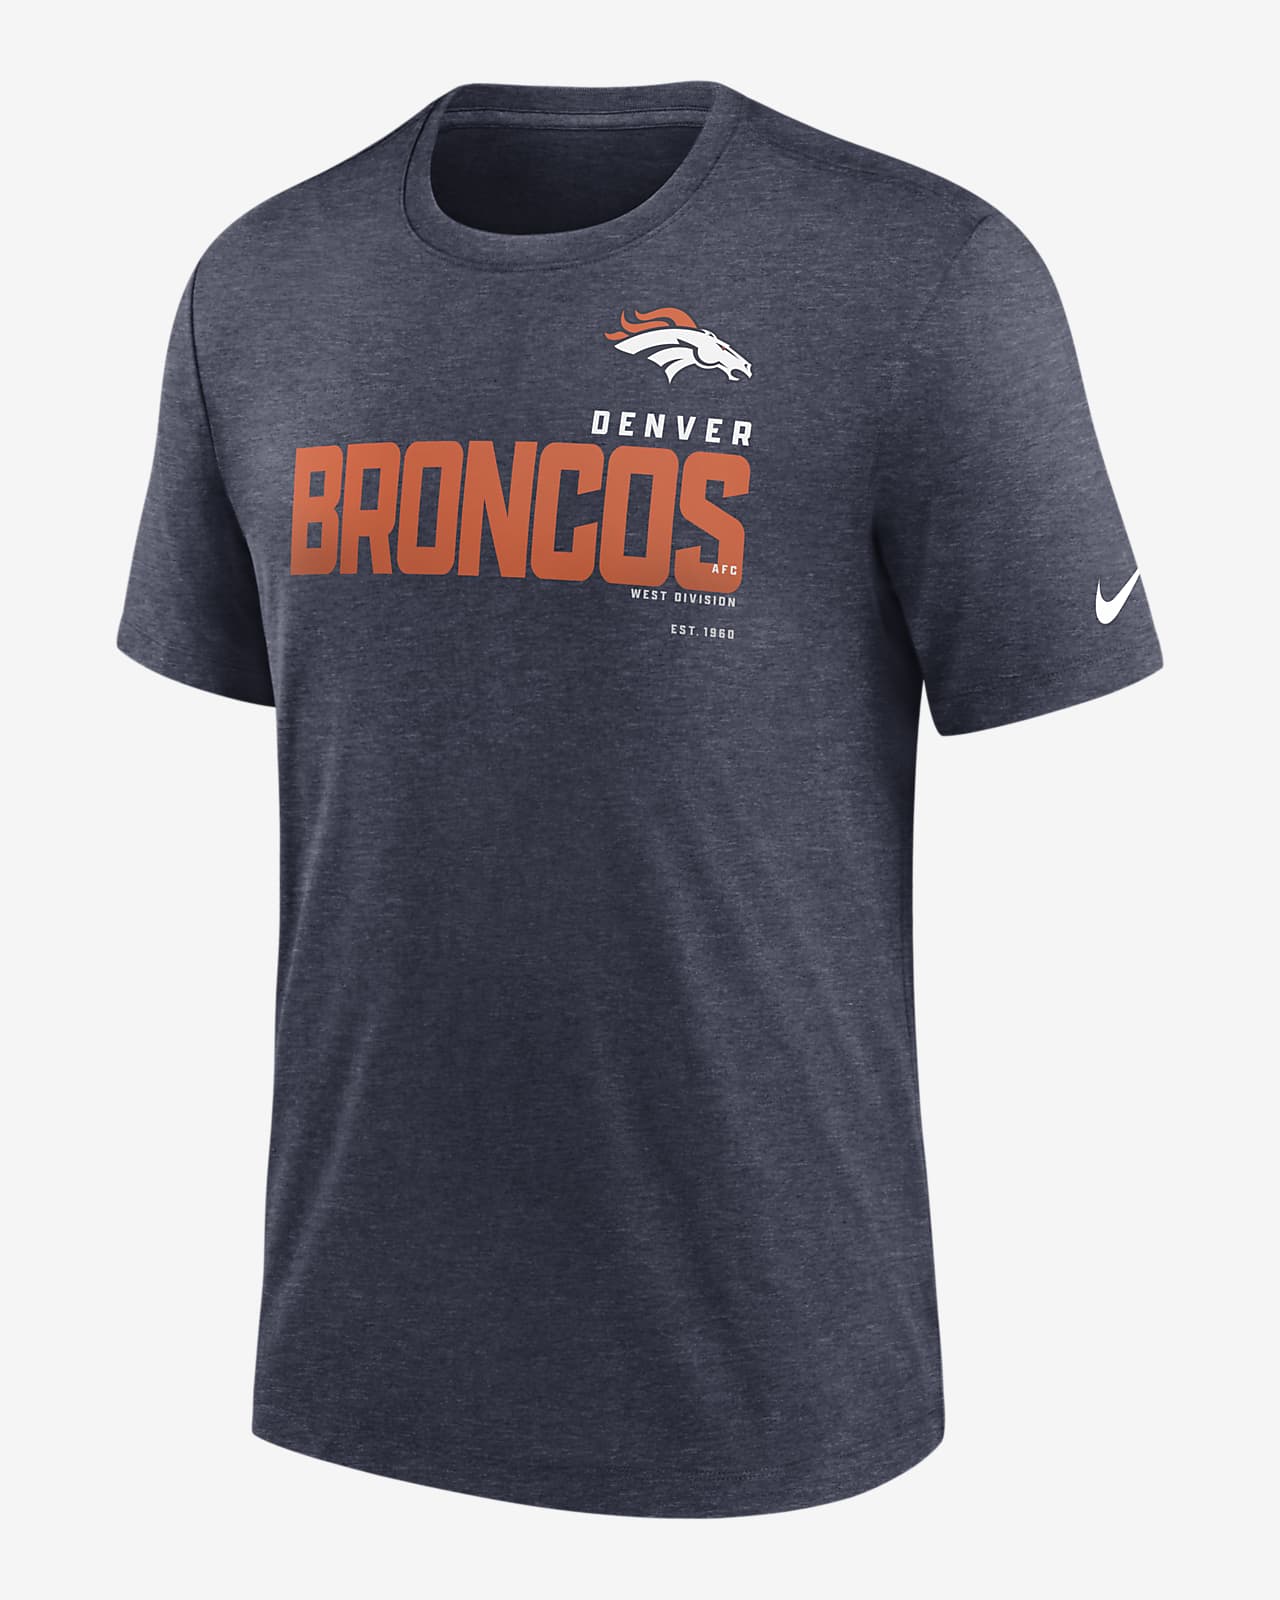 Men's Nike Heather Navy Denver Broncos Team Tri-Blend T-Shirt Size: Medium